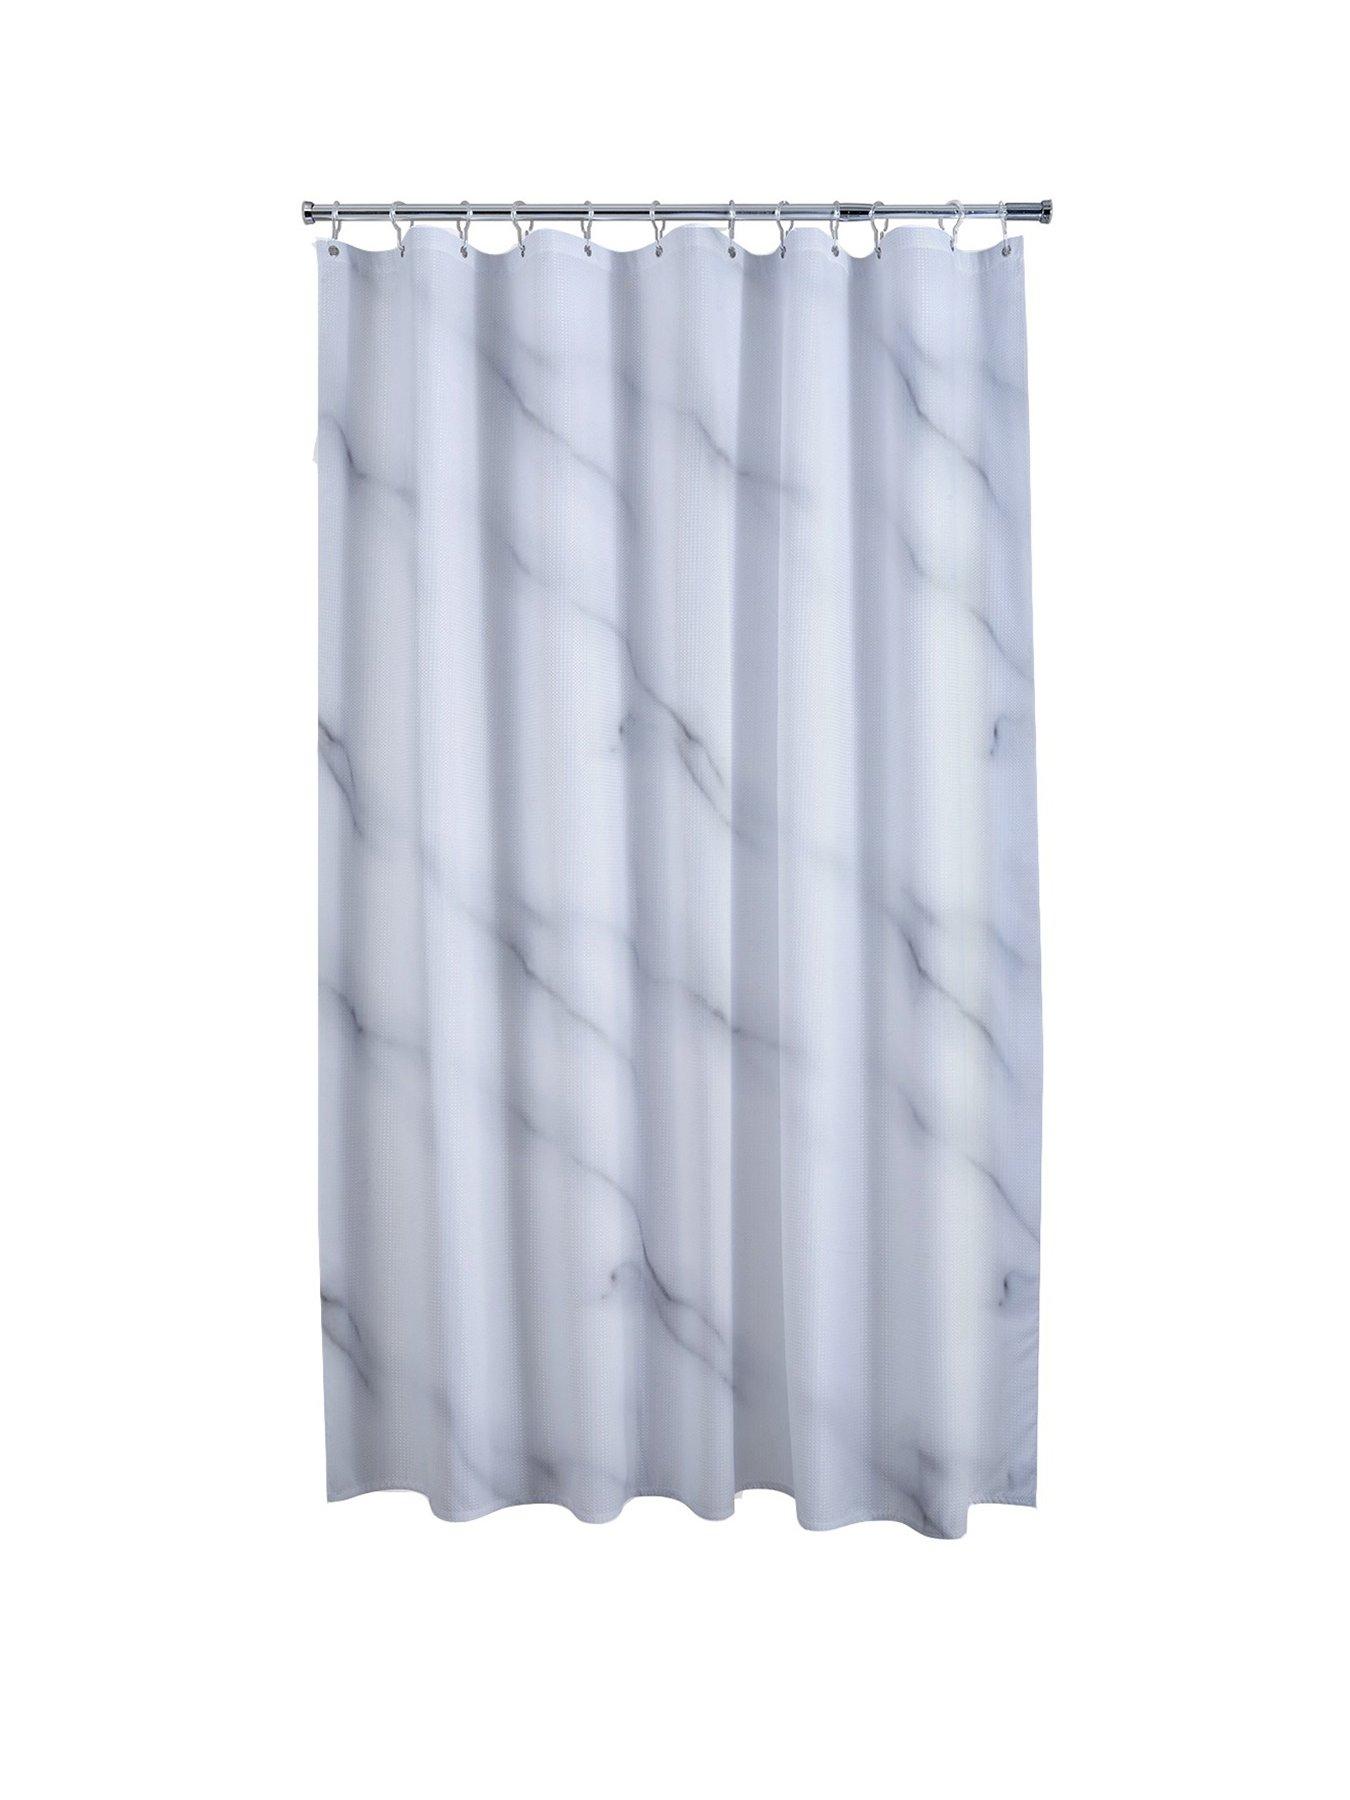 Geometry Shower Curtains Fabric Starfish Bath Curtain Brown Black Striped  Hooks Rings For Bathroom Curtains Home Decor Supplies